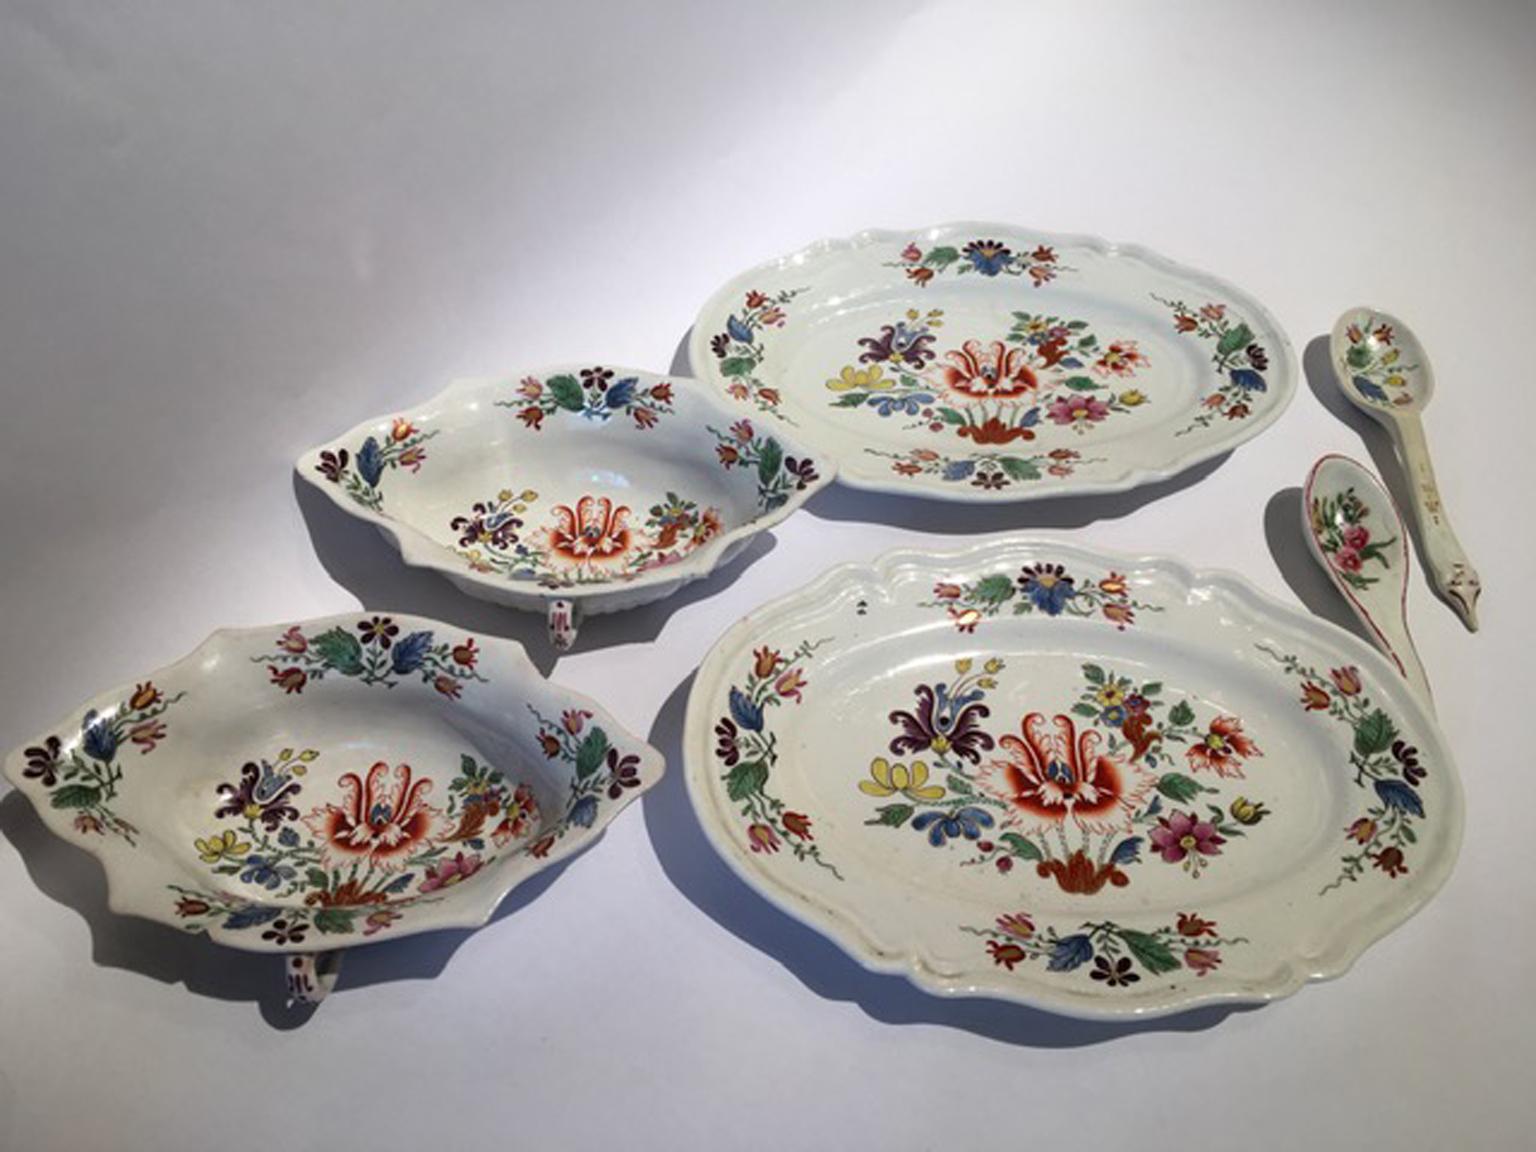 Italy Richard Ginori Late 18th Century Pair Porcelain Sauce Boats Tulip Decor For Sale 2